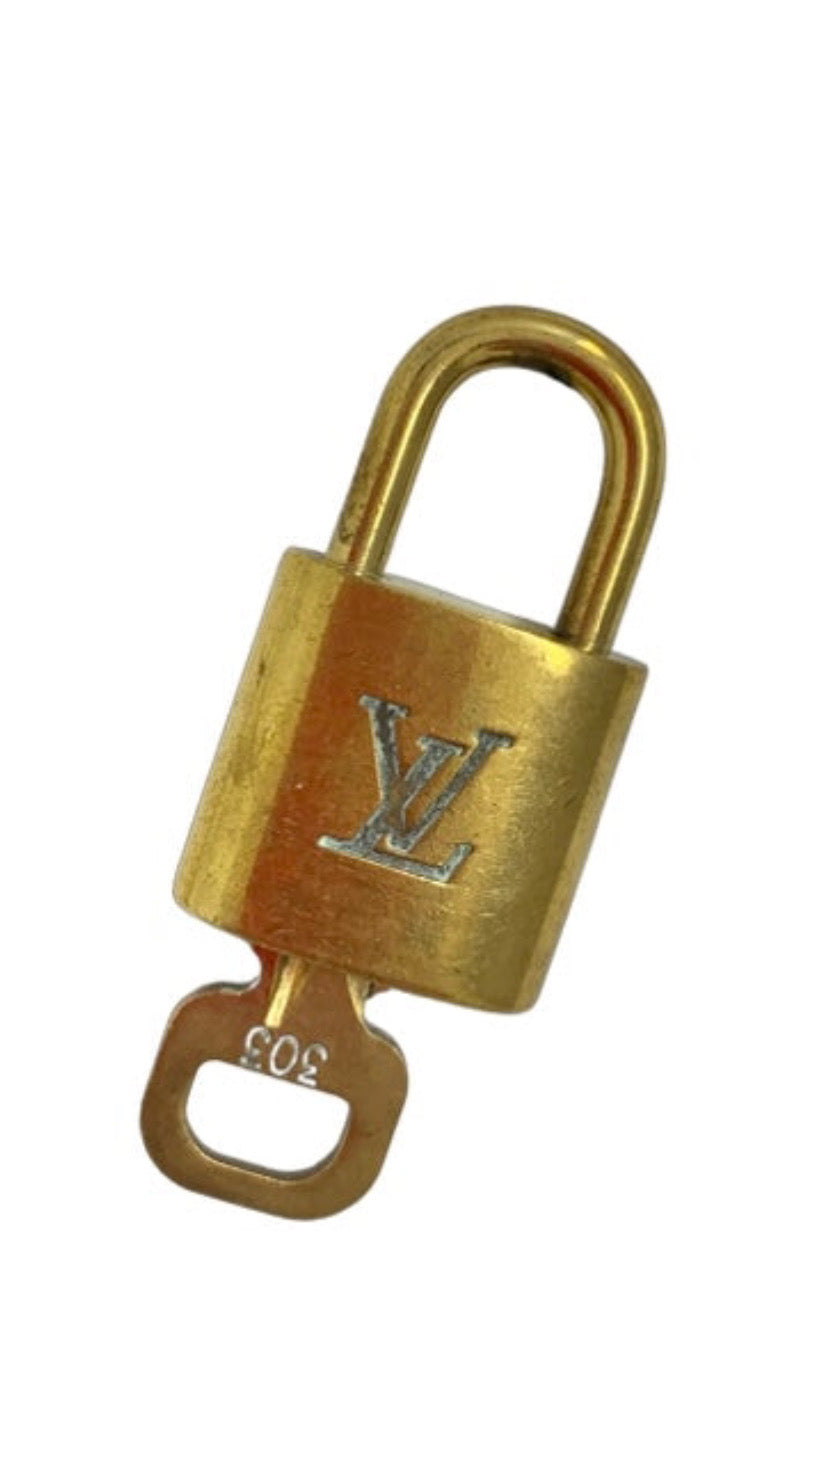 Louis Vuitton 303 Silver Metal Padlock & Key